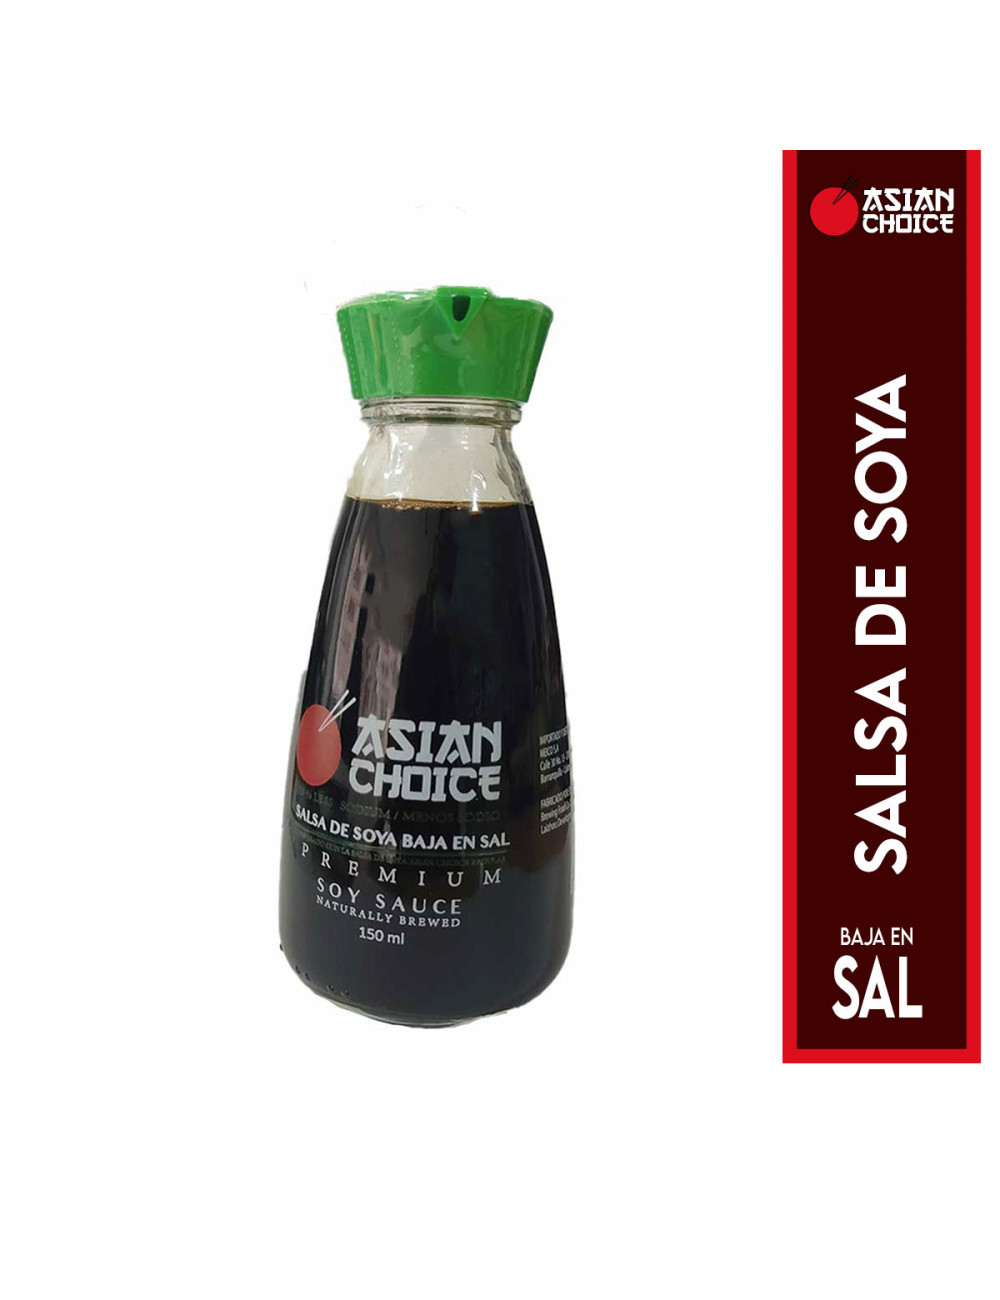 Asian Choice Salsa de Soya Premium Baja en Sal 150ml D1266 Asian Choice